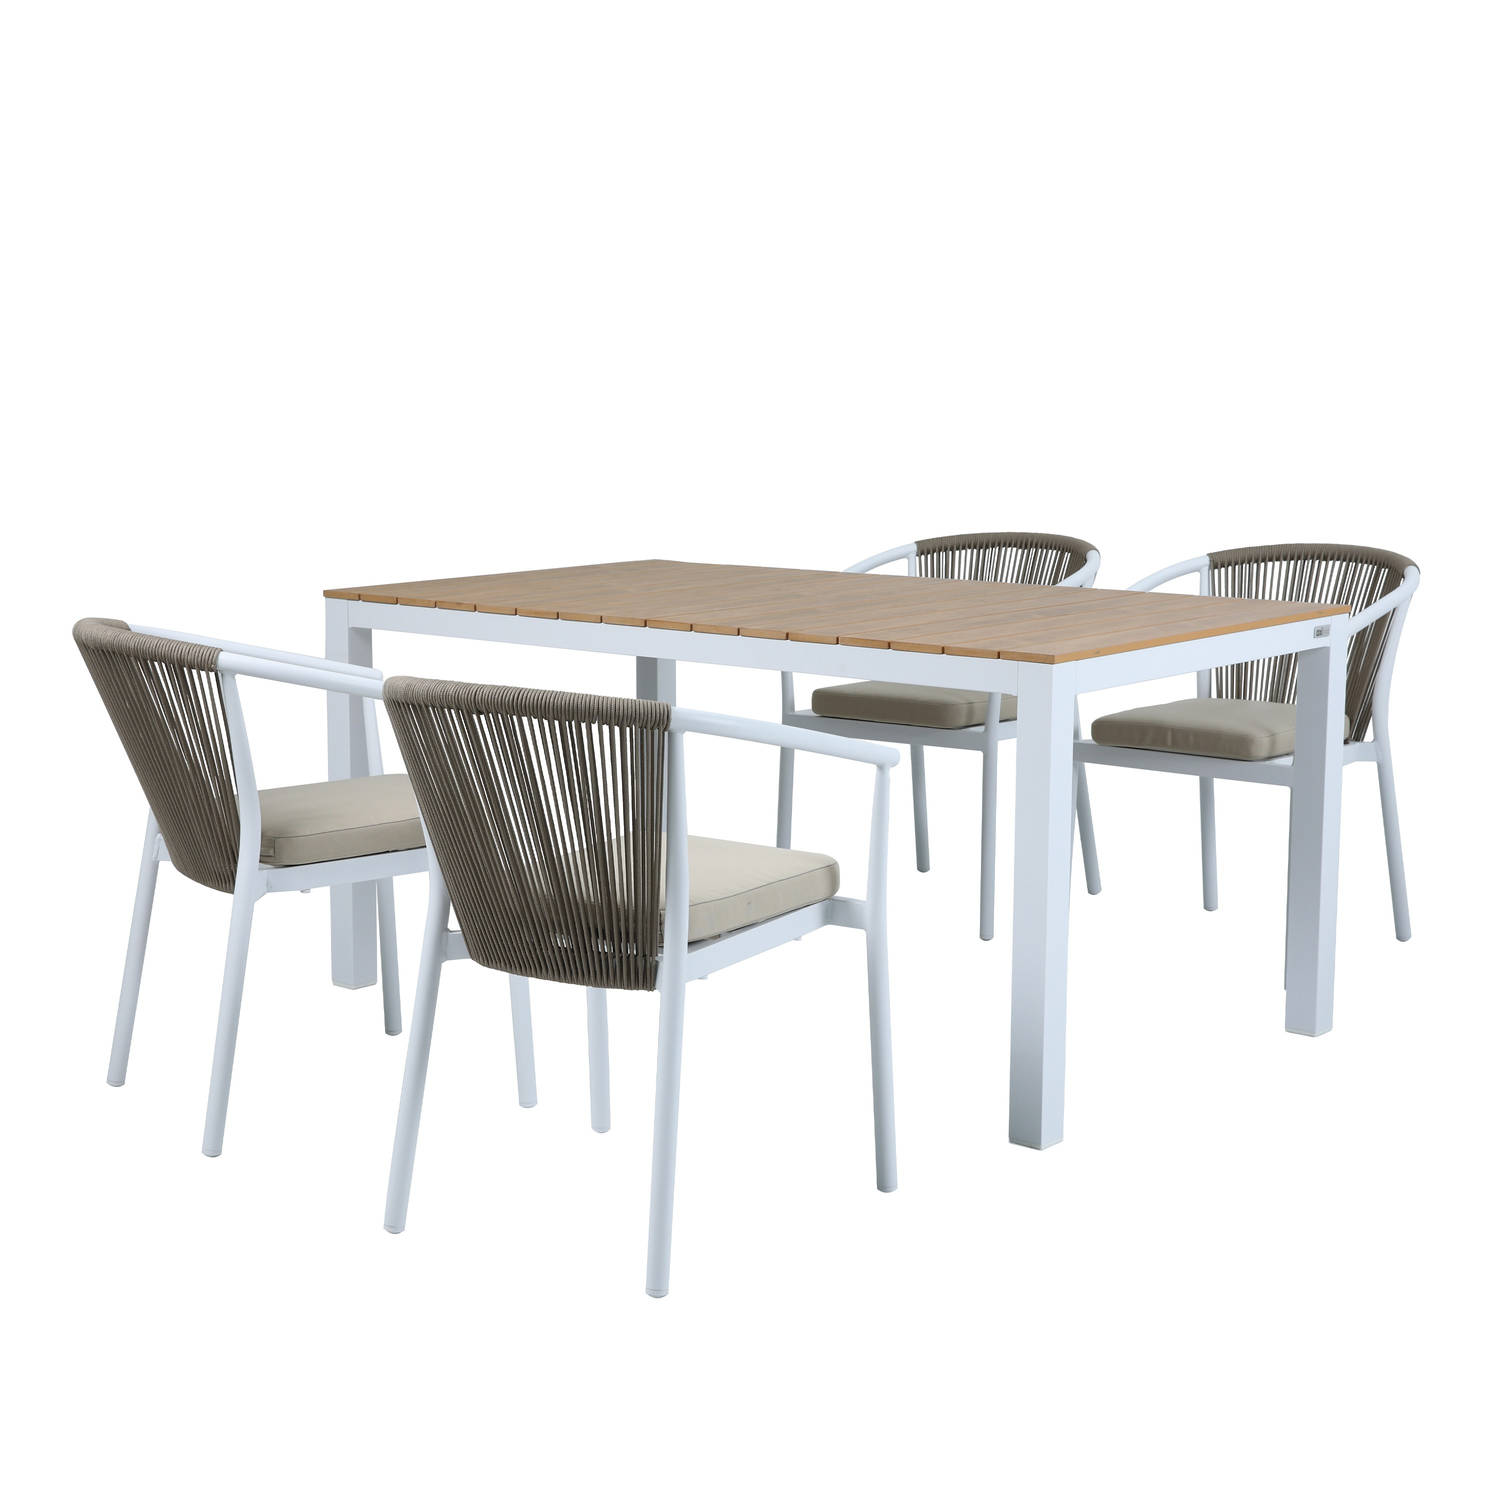 AXI Suvi Tuinset met 4 stoelen in Wit & Teak look Dining set voor tuin in Aluminium-Polywood